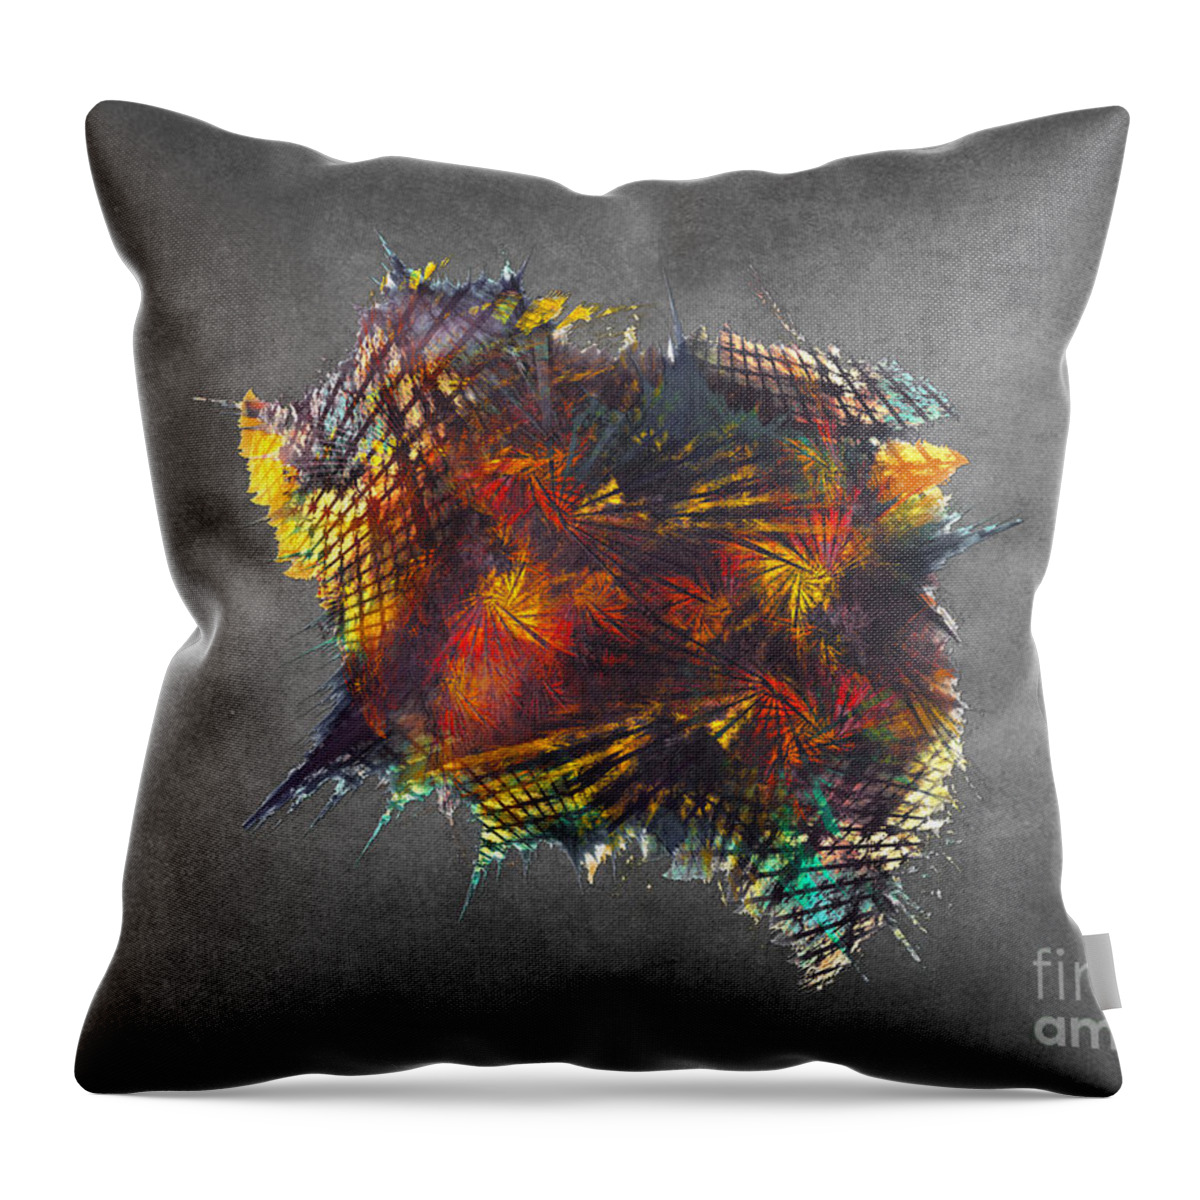 Cube Throw Pillow featuring the digital art Cube - Fractal Art by Justyna Jaszke JBJart